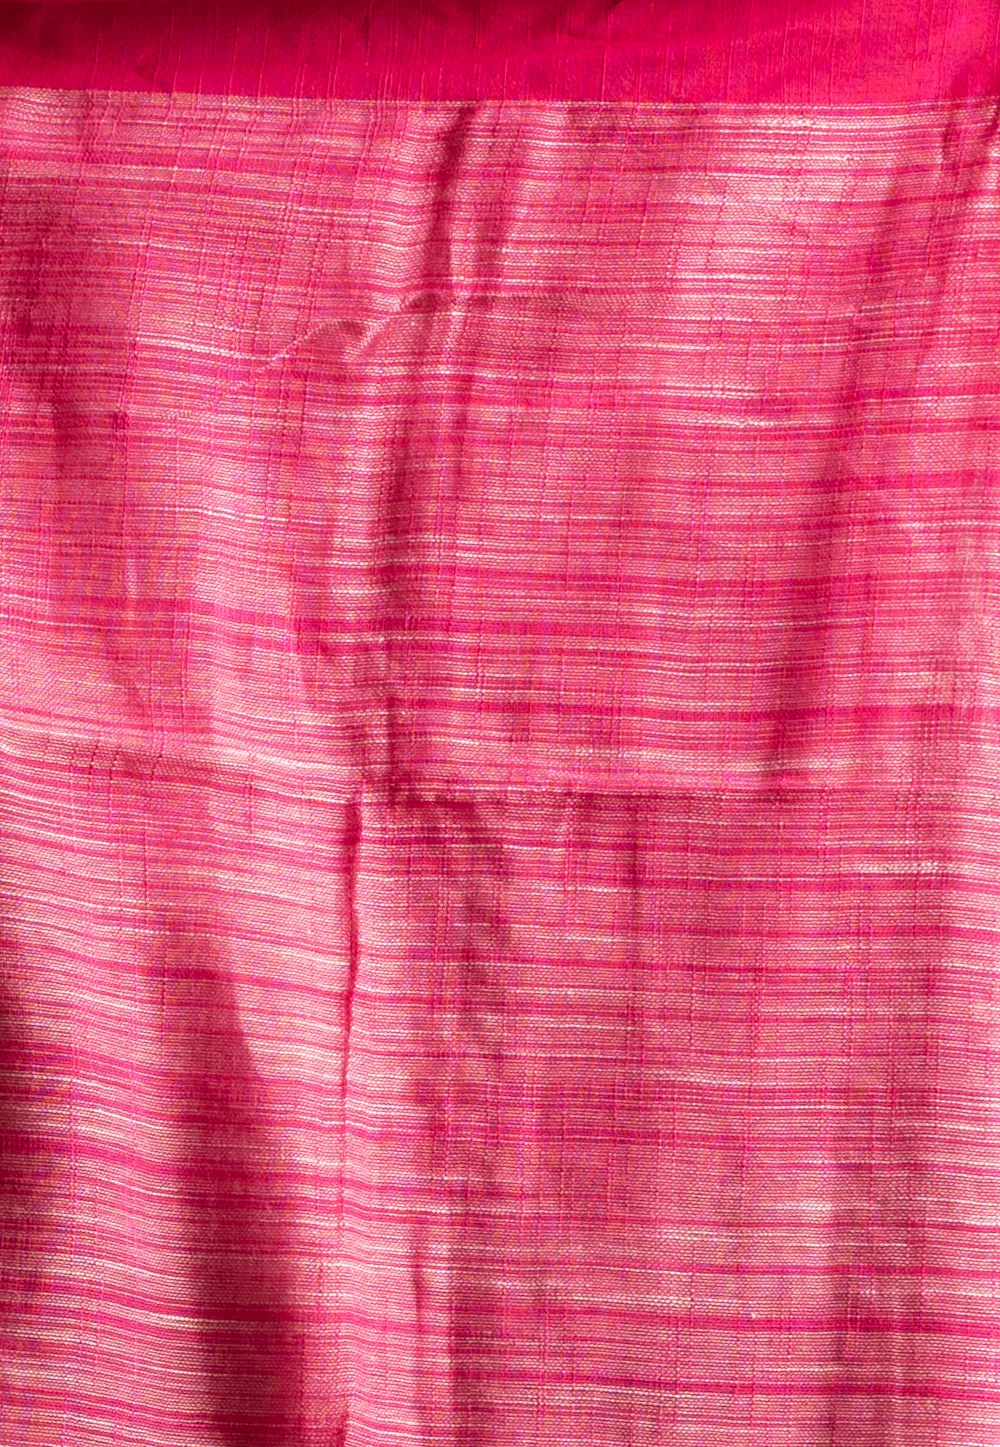 offwhite handloom saree with contrasting border multicolor motifs 602126f16925e 1612785393